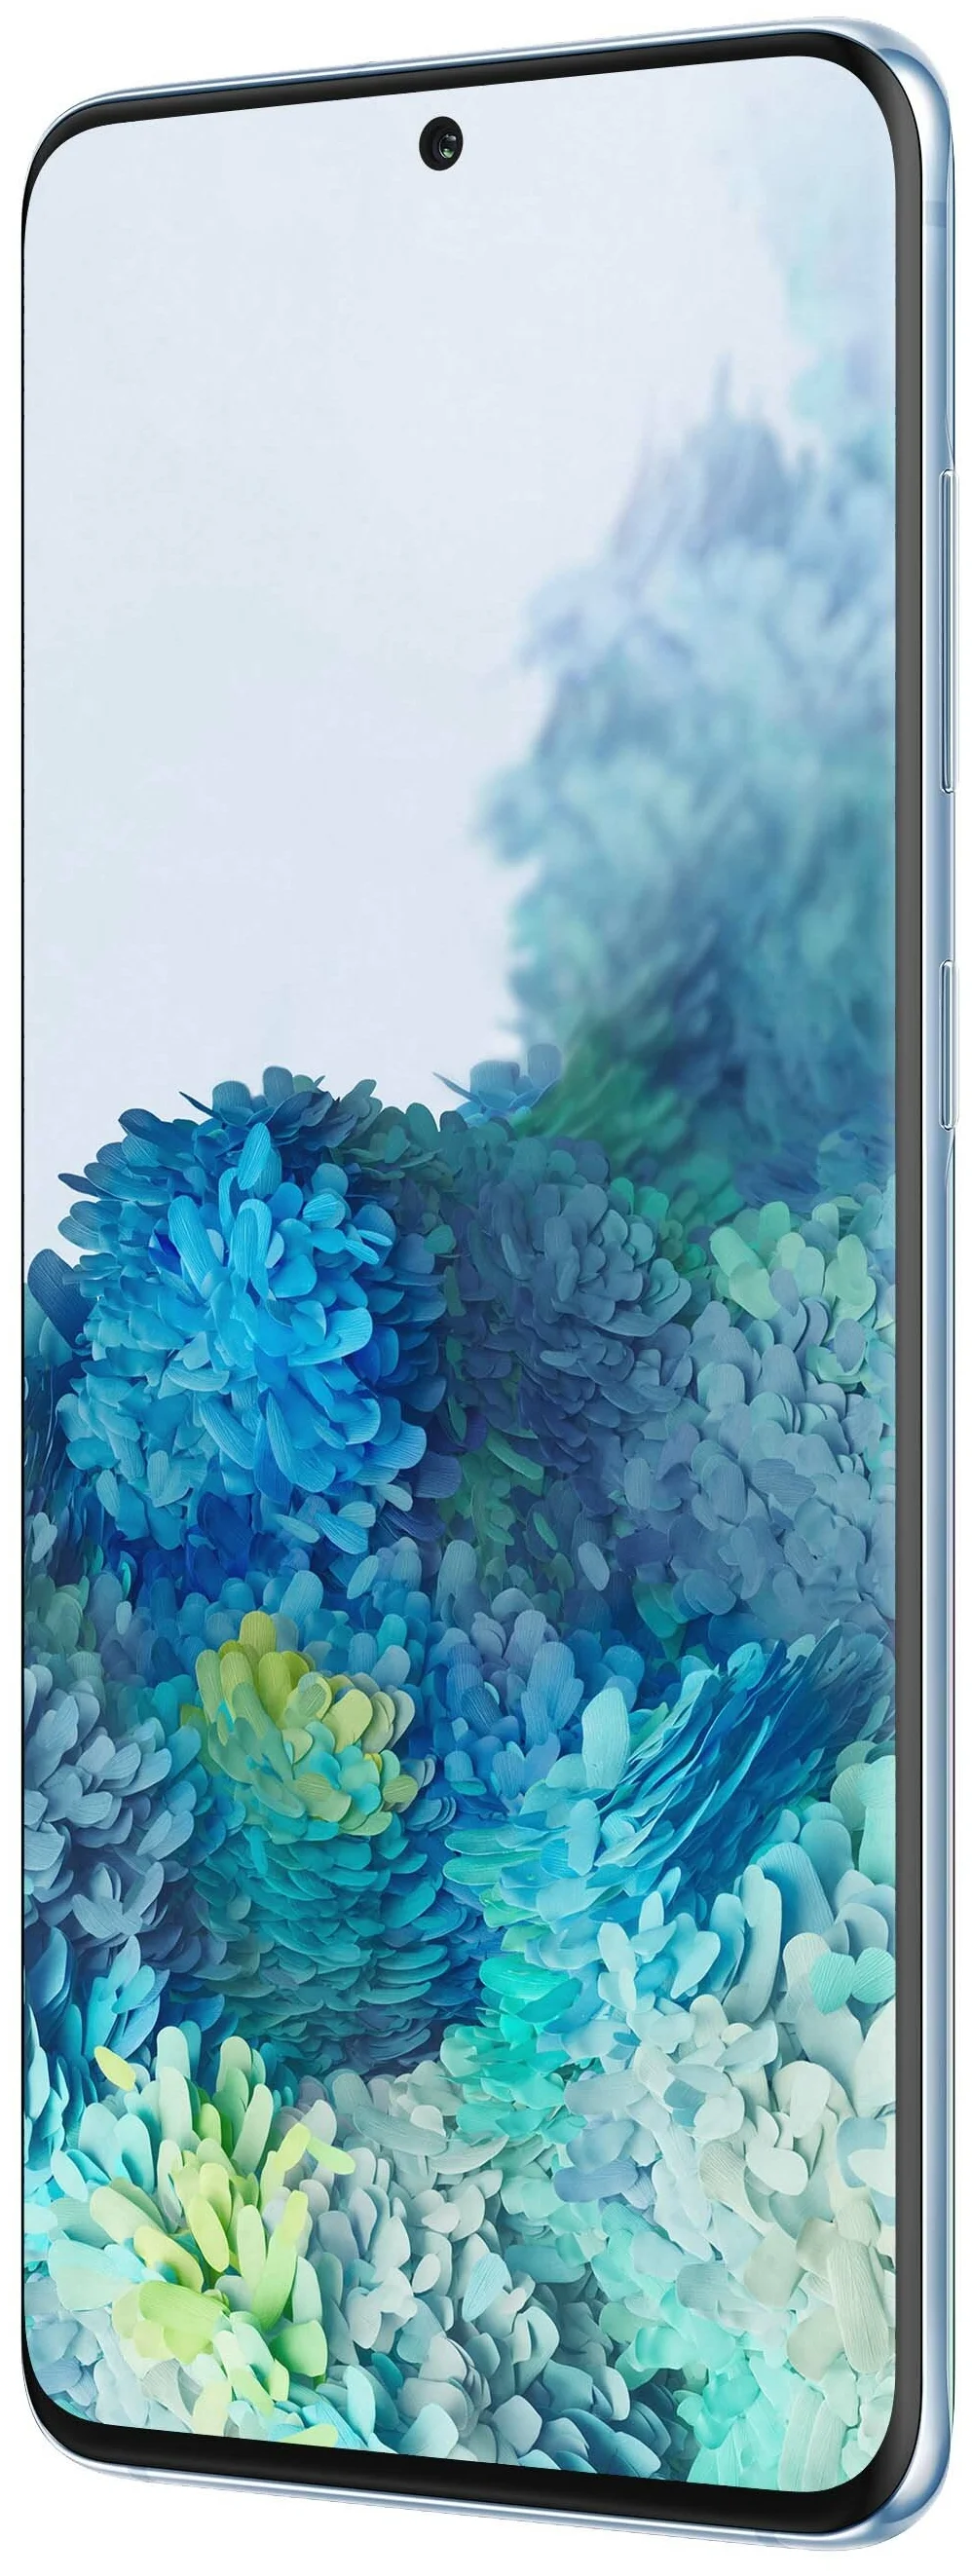 Samsung Galaxy S20 - интернет: 4G LTE